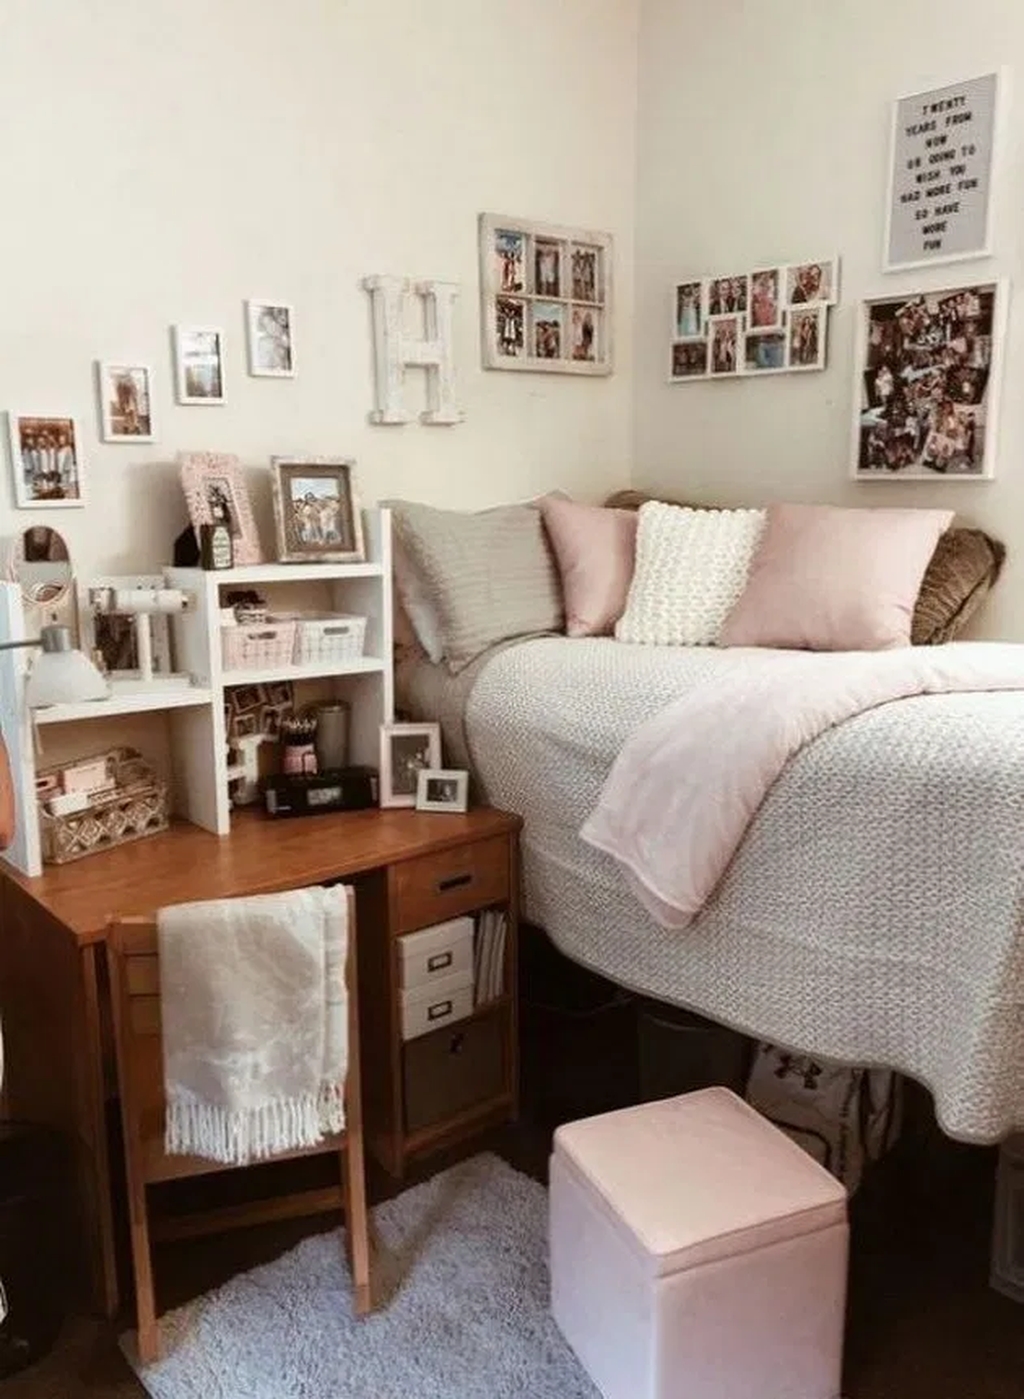 Splendid Dorm Room Ideas To Tare Room Decor To The Next Level 17